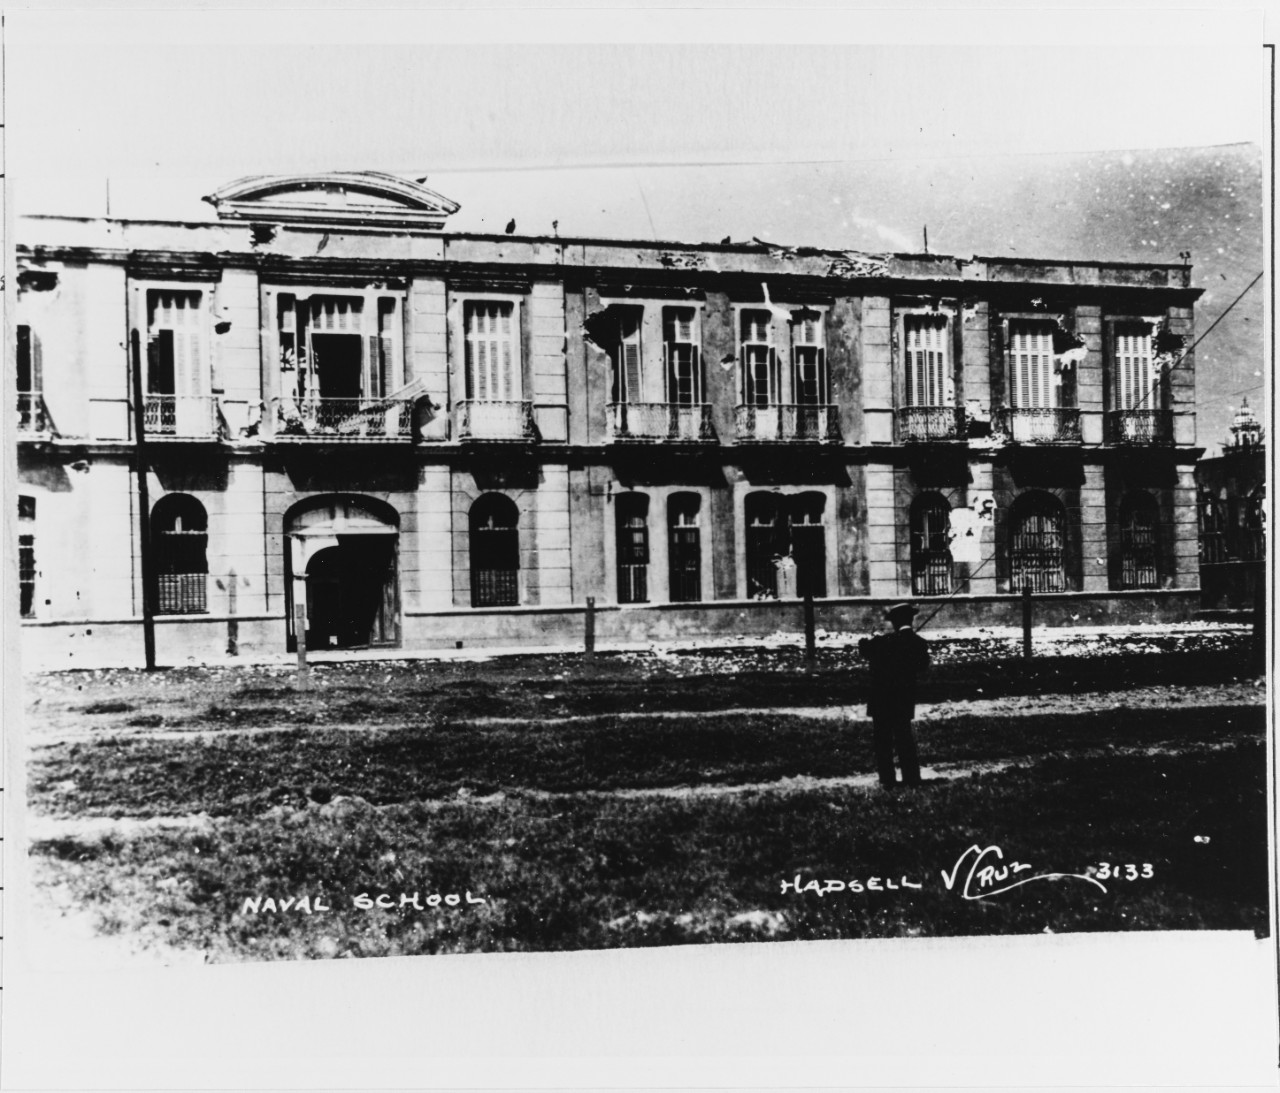 U.S. Navy shells burst inside building known as "Naval School", 21-27 April, 1914